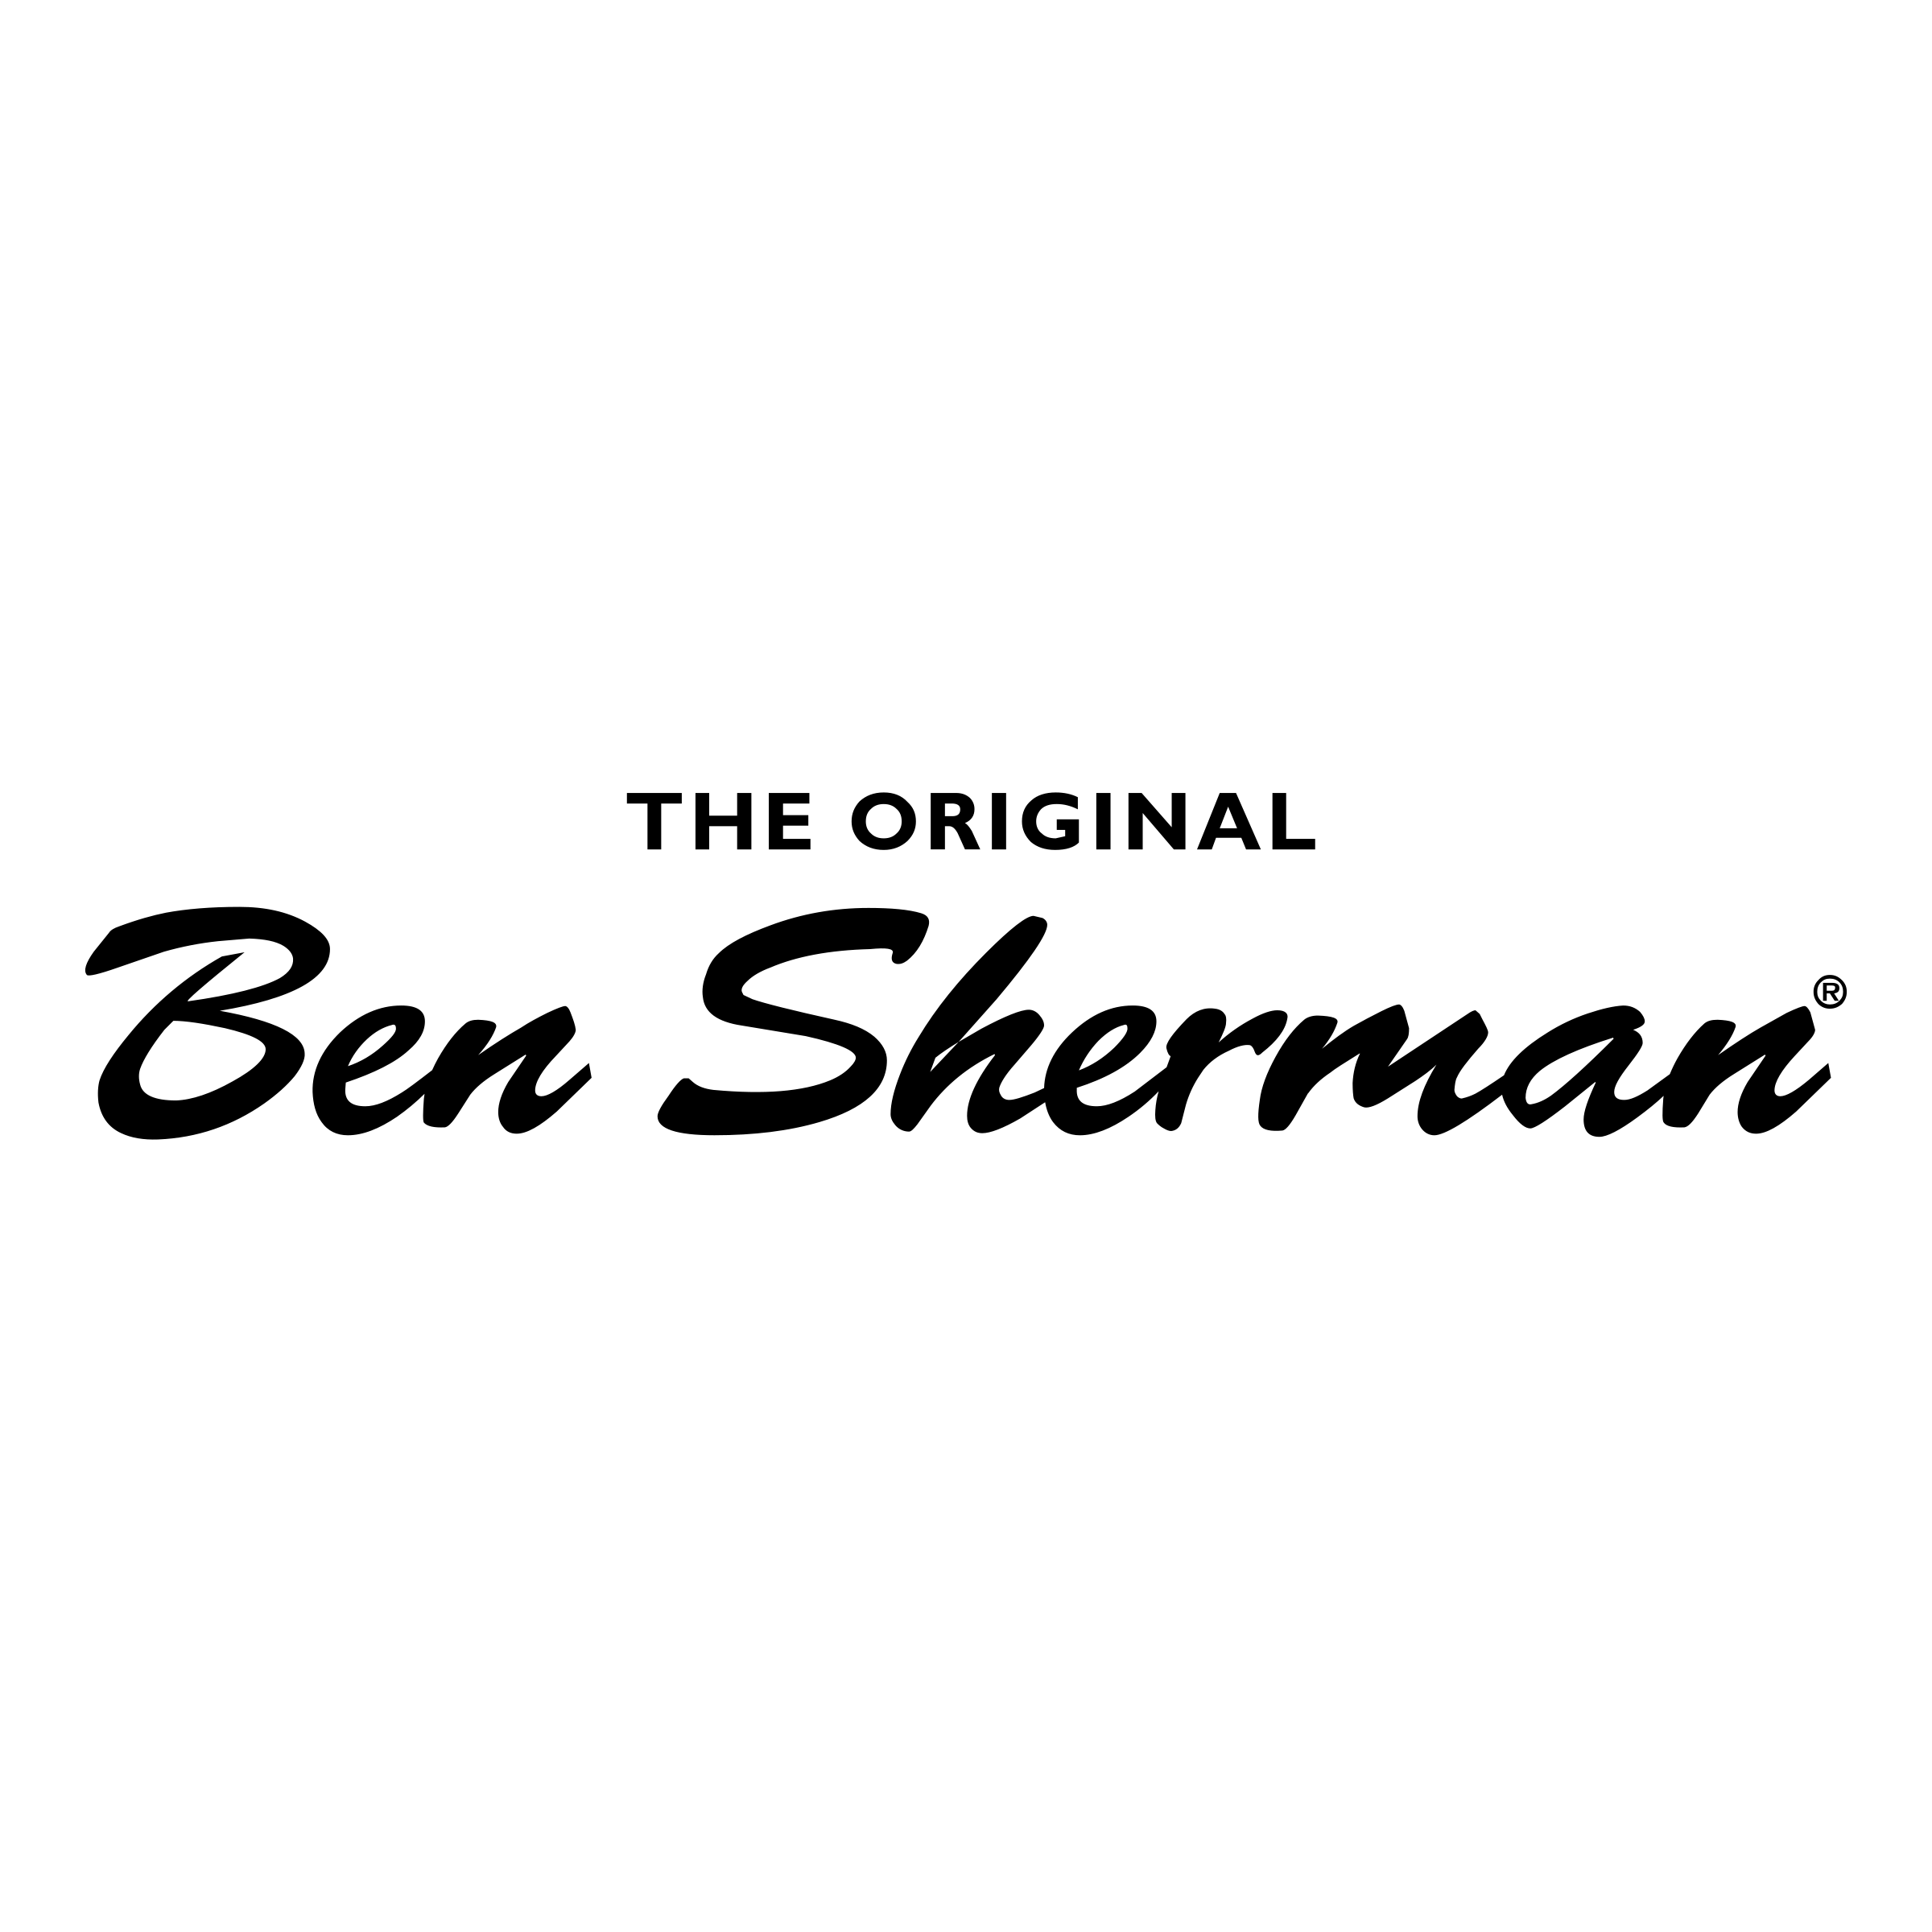 Sherman Logo - Ben Sherman Logo PNG Transparent & SVG Vector